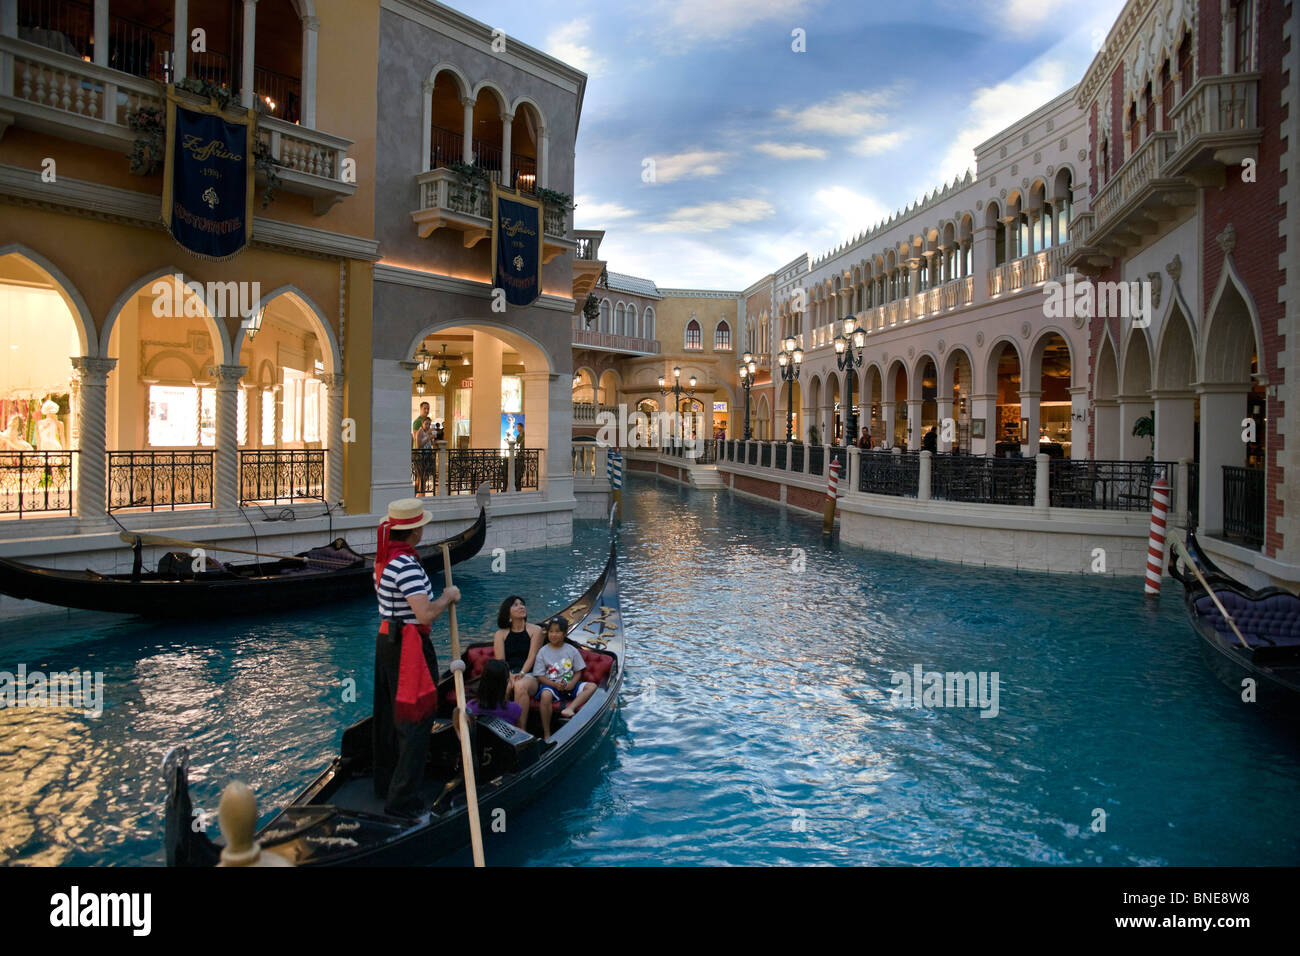 Intenso Charles Keasing Adversario The Venetian Las Vegas - replica Venice setting. Canal water feature with  gondolas Stock Photo - Alamy